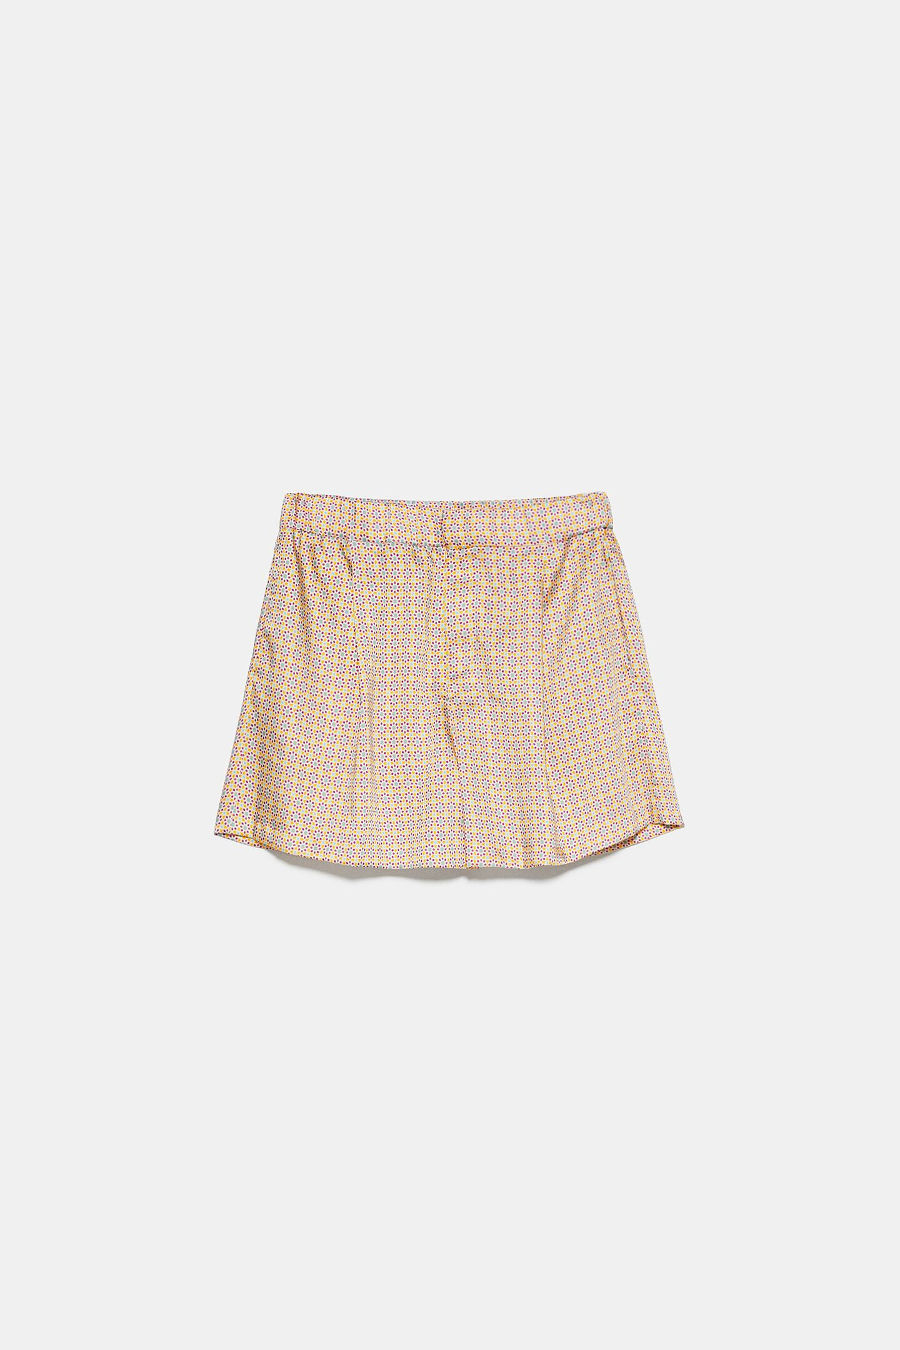  Celana pendek elastis motif geometris - Zara Untuk Bersantai Di Rumah